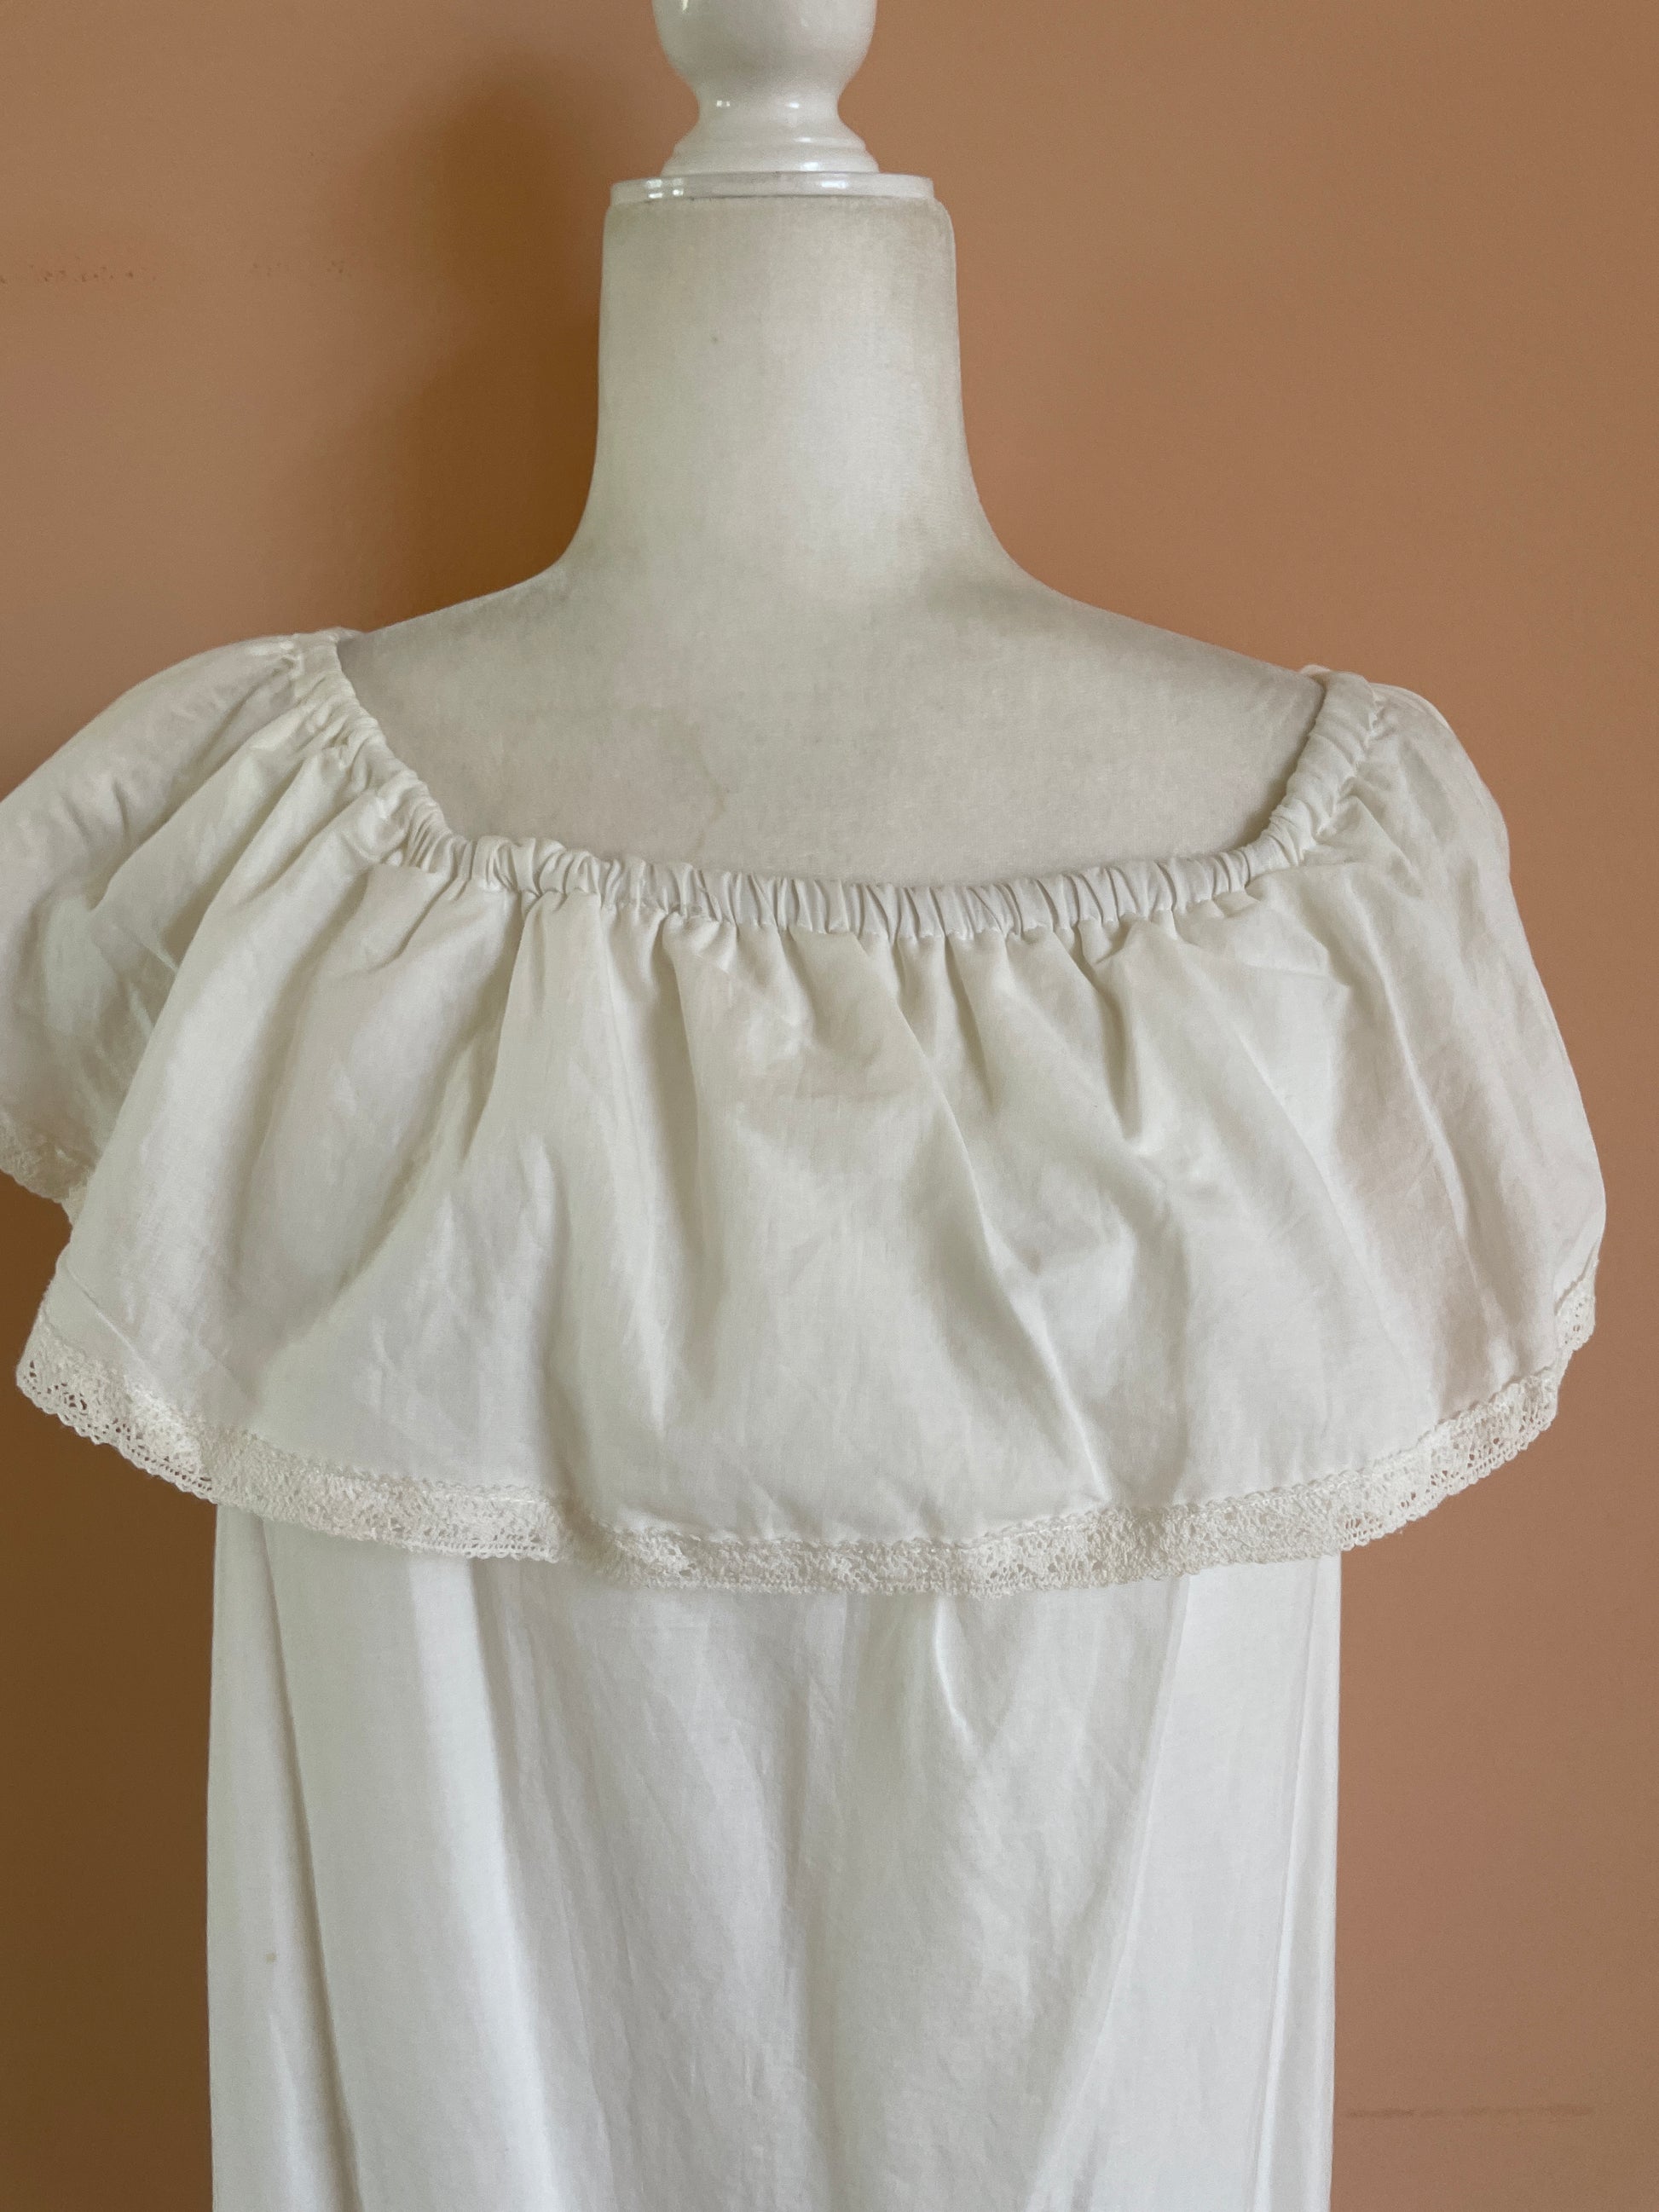  2000s White Cotton Off On Shoulder Sleeveless Summer Dress M